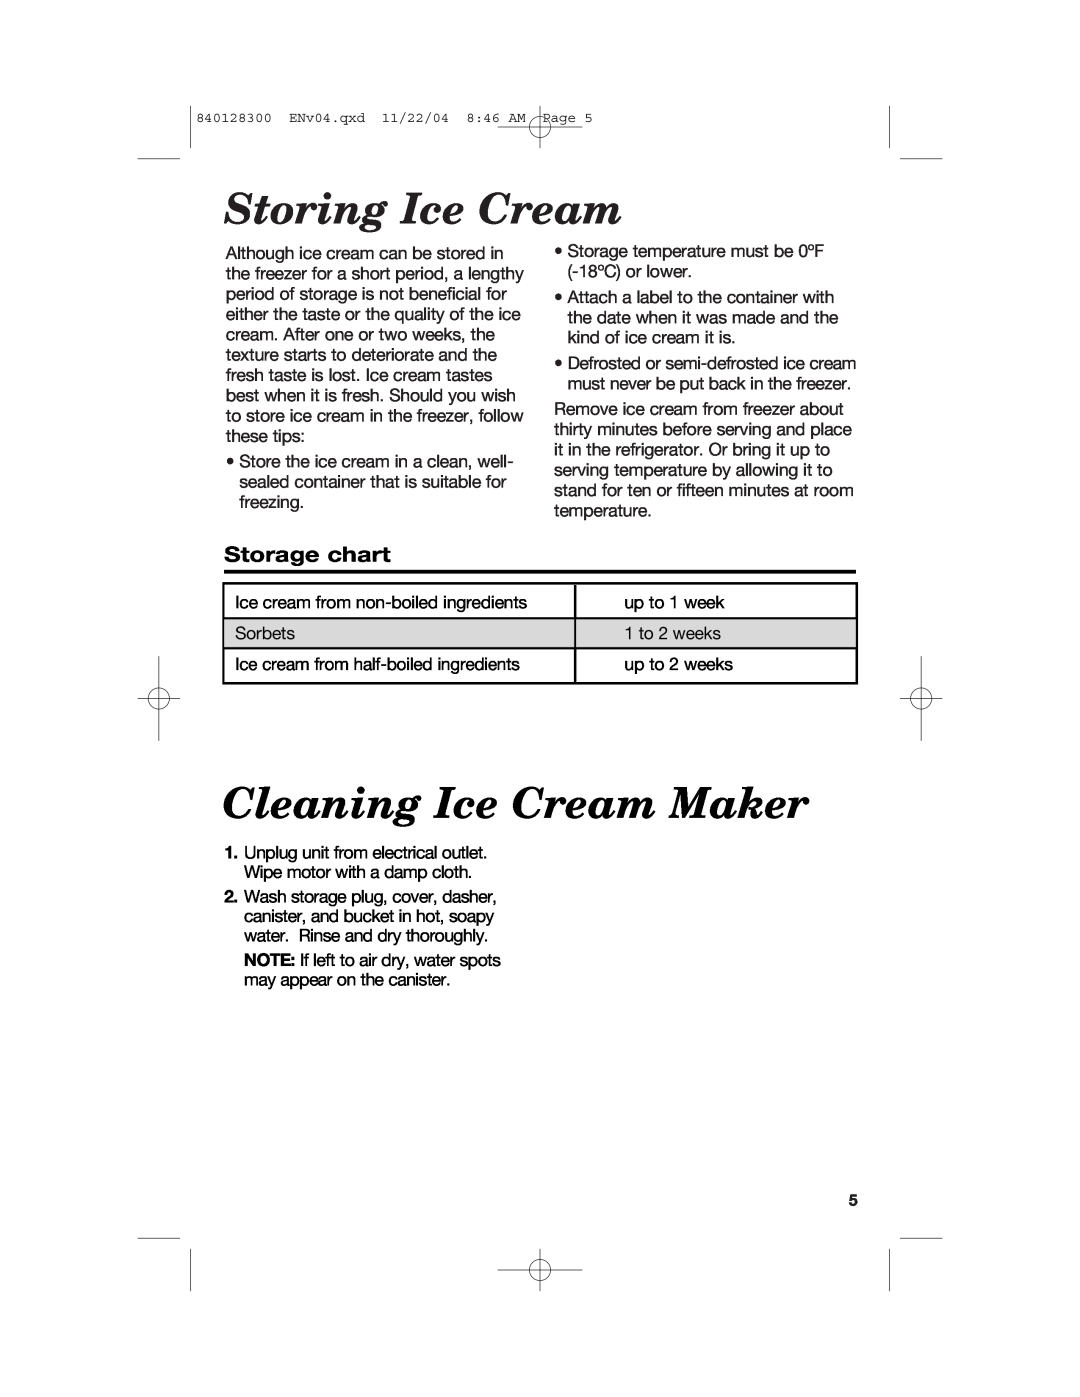 Hamilton Beach 68330 manual Storing Ice Cream, Cleaning Ice Cream Maker, Storage chart 